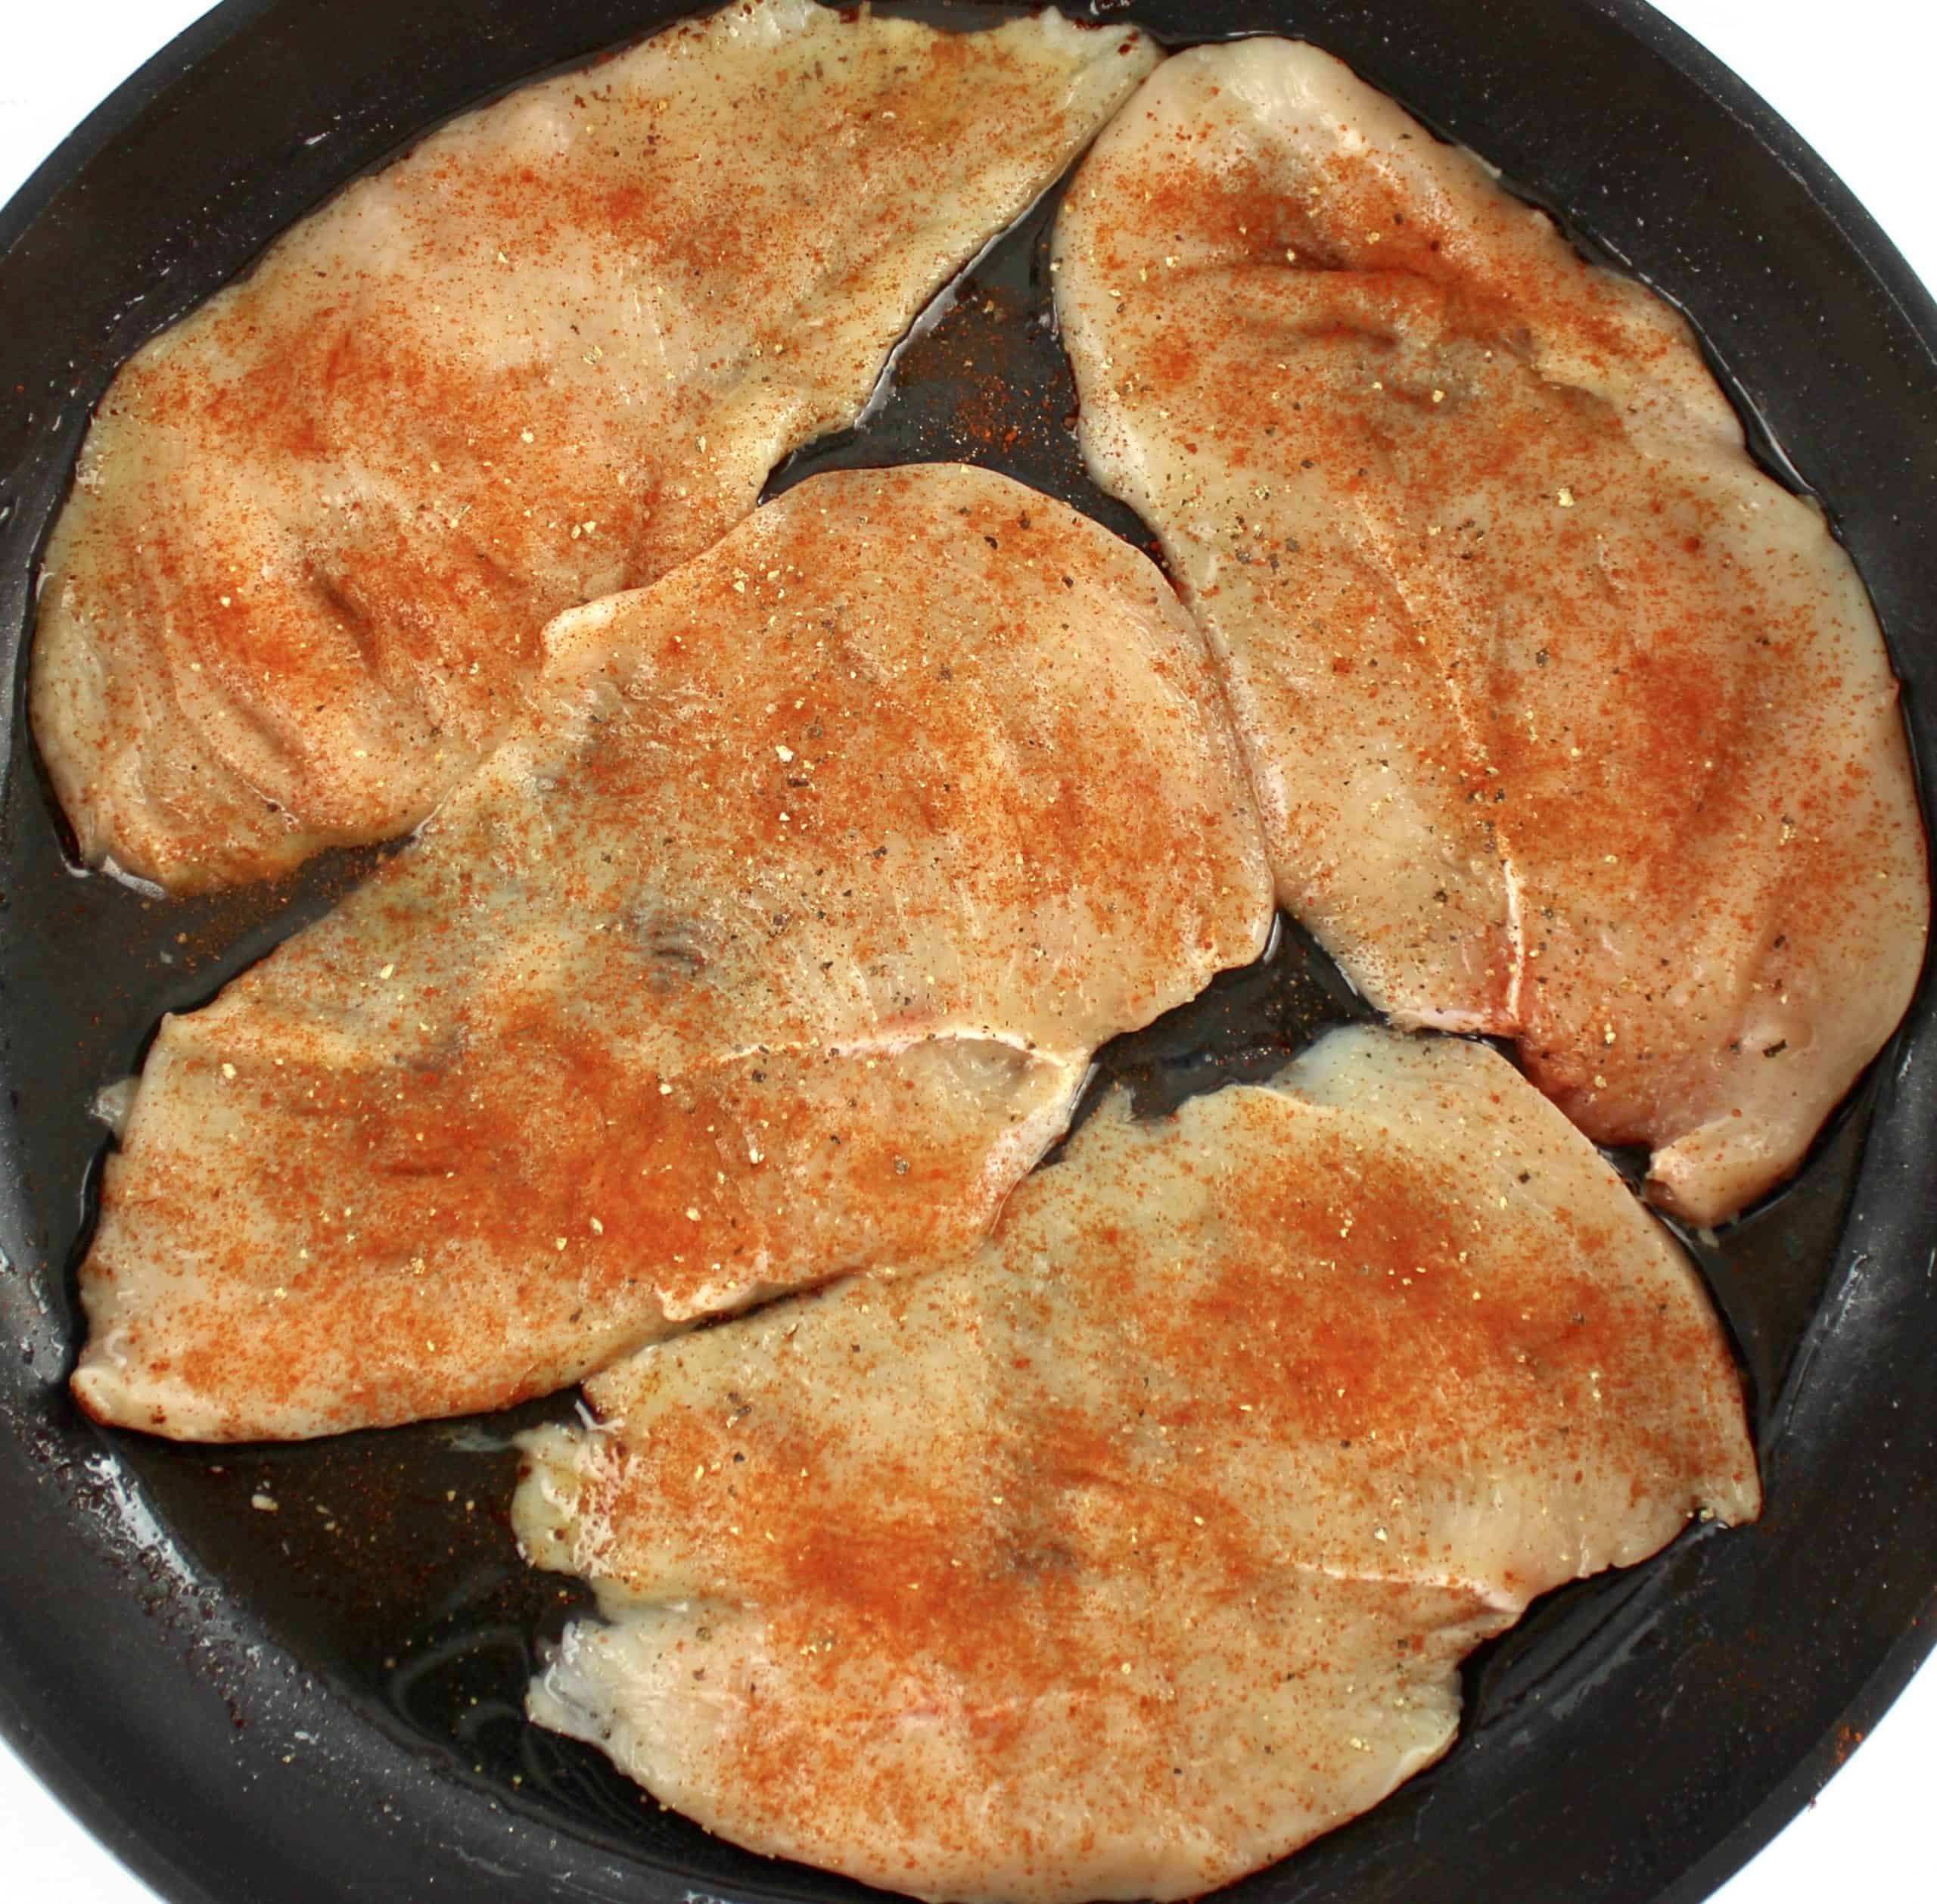 4 seasoned raw chicken breasts in skillet